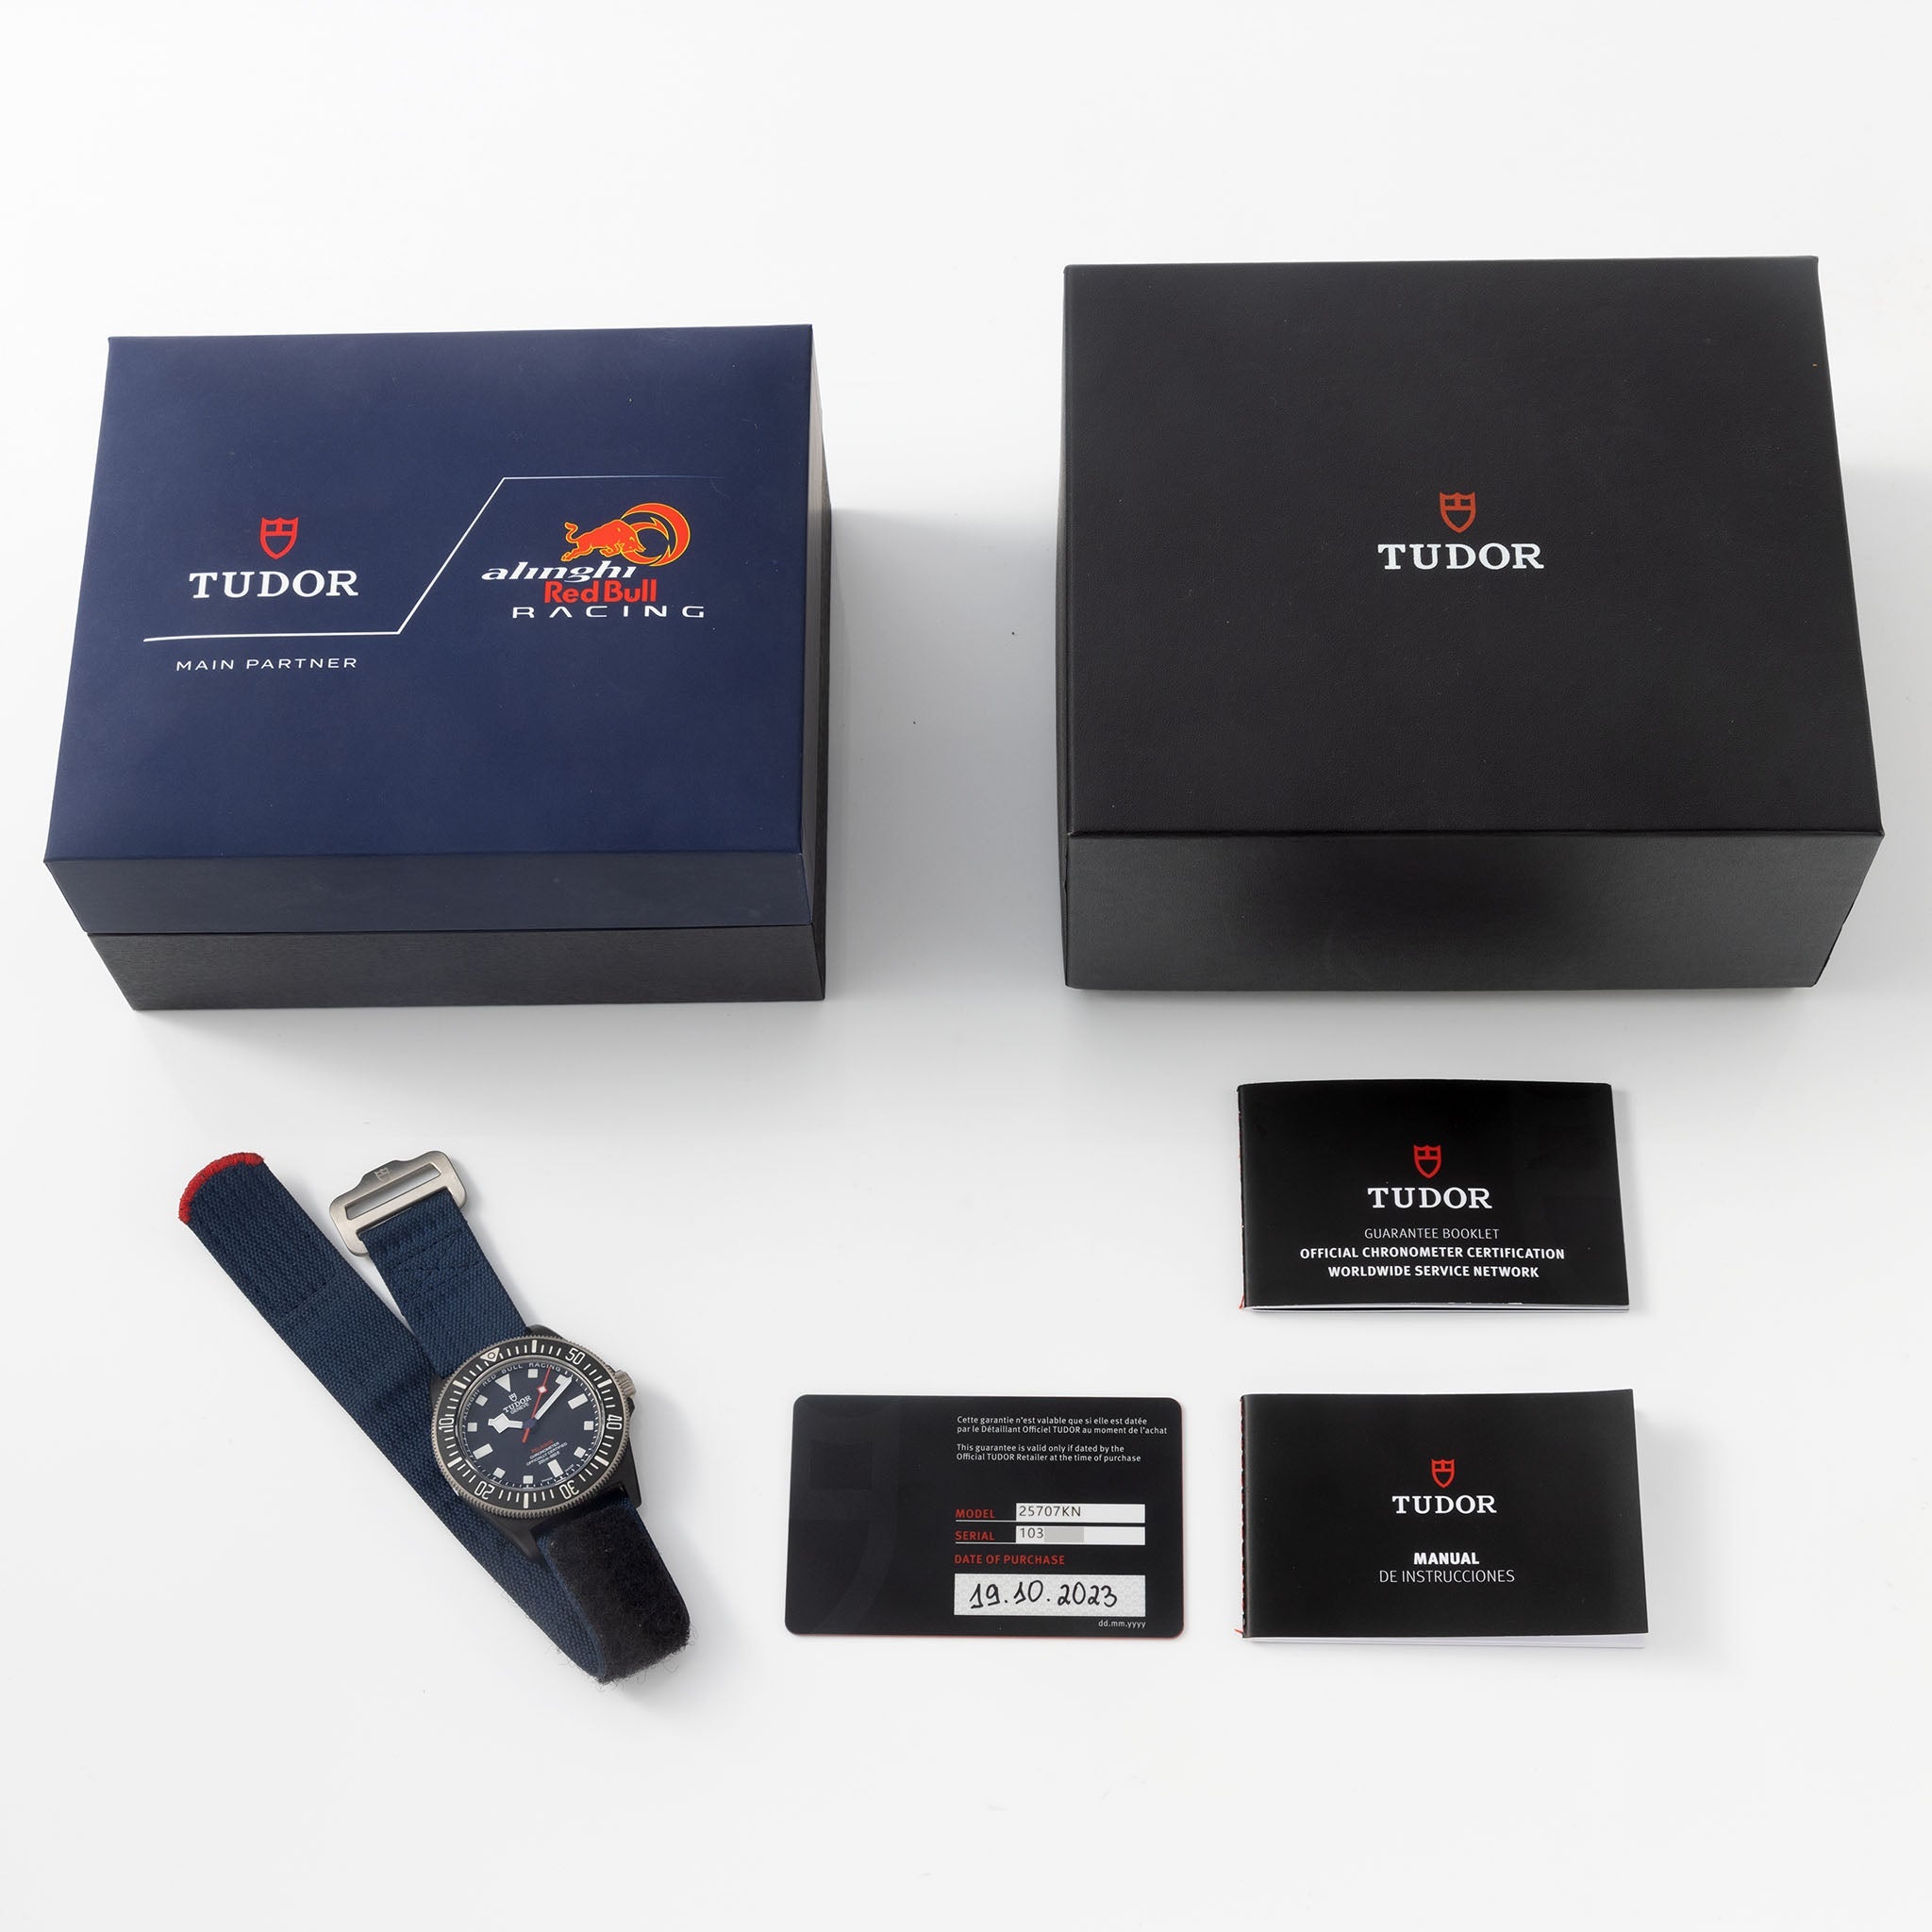 Tudor Pelagos FXD Alinghi Red Bull Box and Paper Set Ref 25707KN